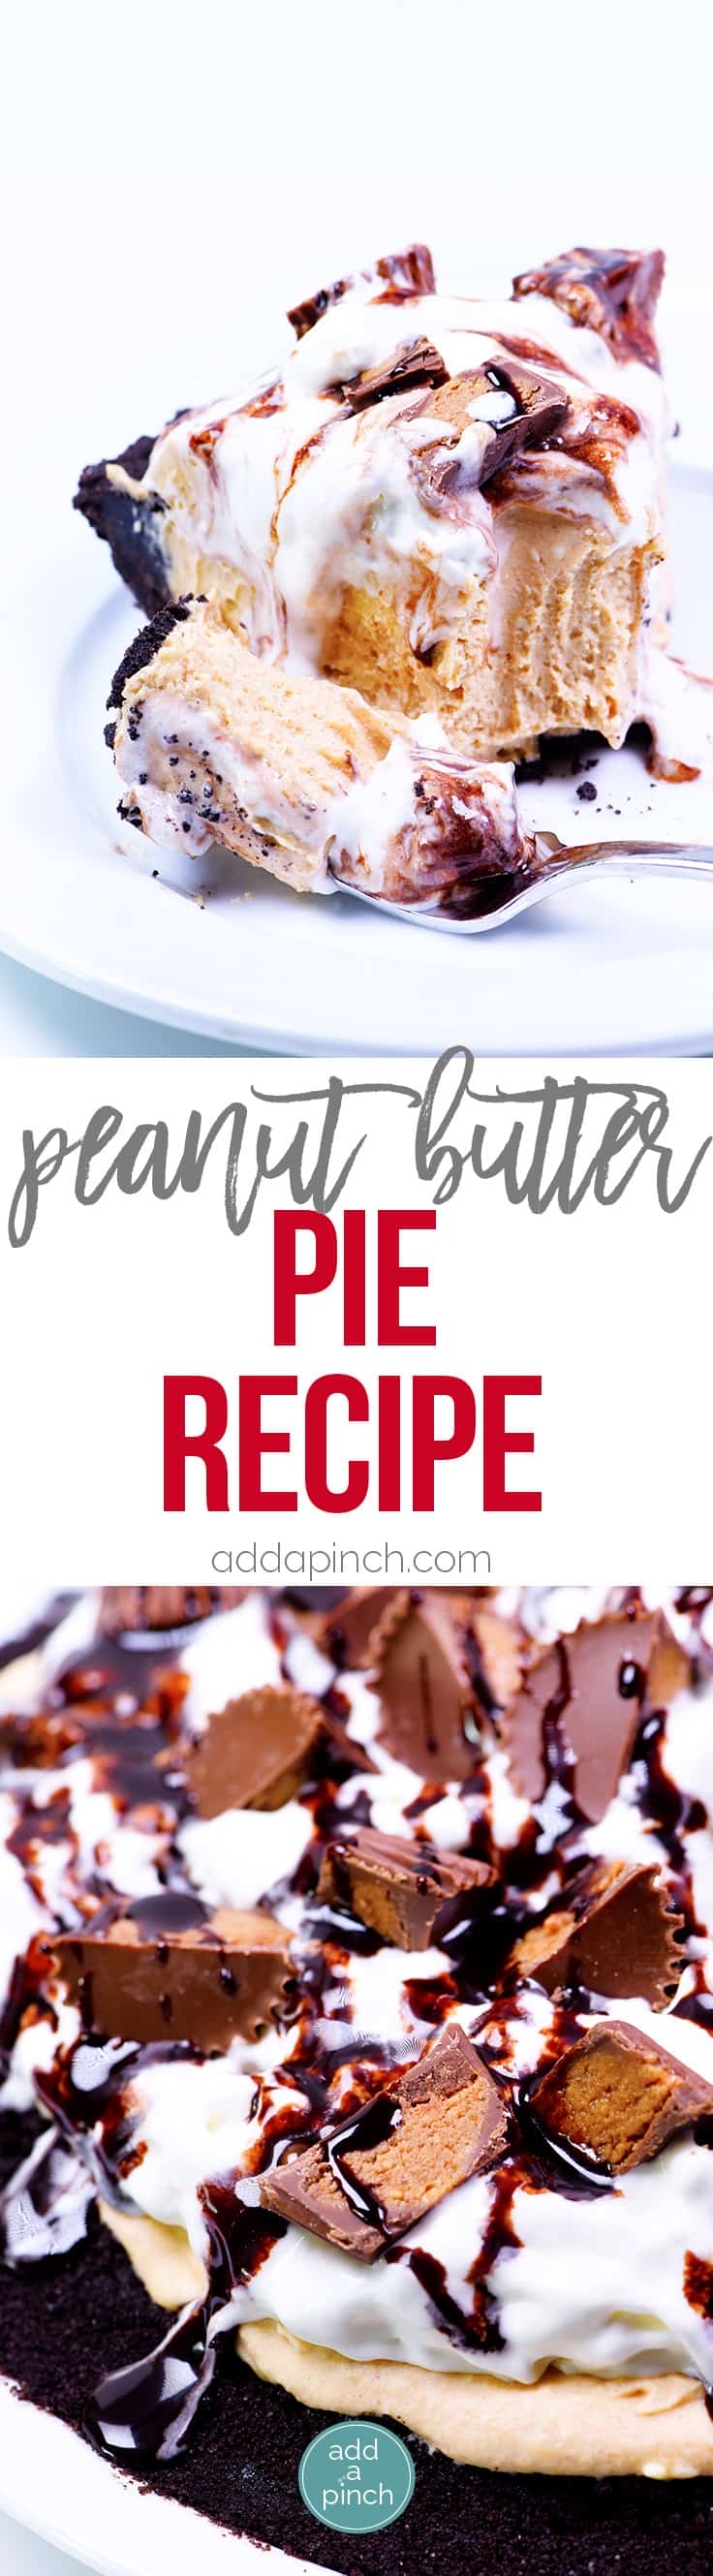 Peanut Butter Pie Recipe - A simple, no-bake peanut butter pie recipe that is perfect for the peanut butter lover! // addapinch.com